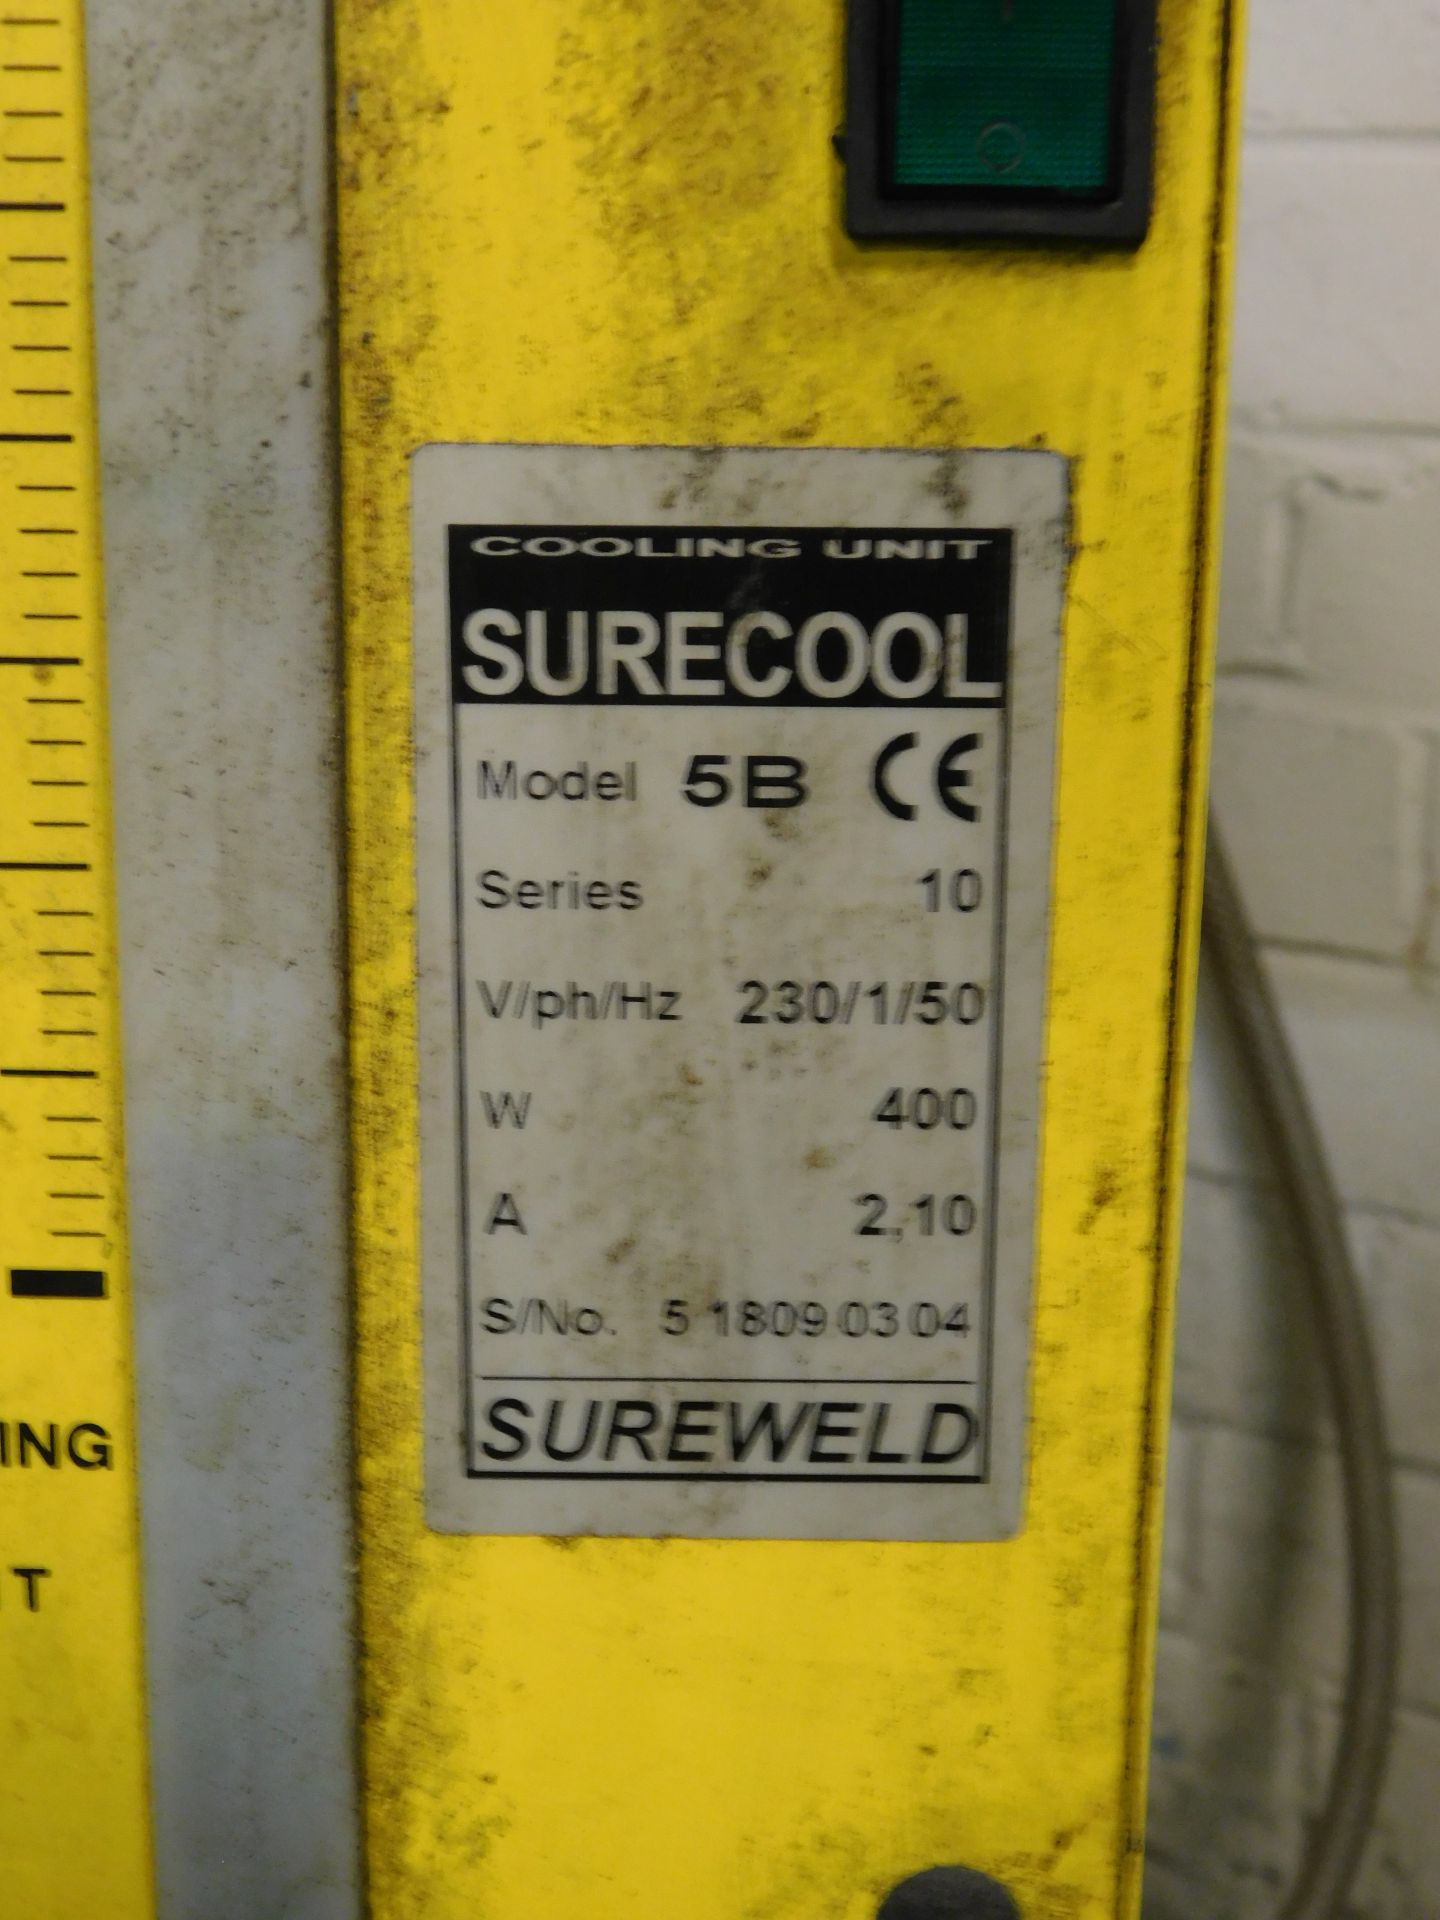 PBF 26 Spot Welder with Sureweld Surecool Model 5B Cooling Unit (Location: Kettering - See General - Bild 2 aus 4